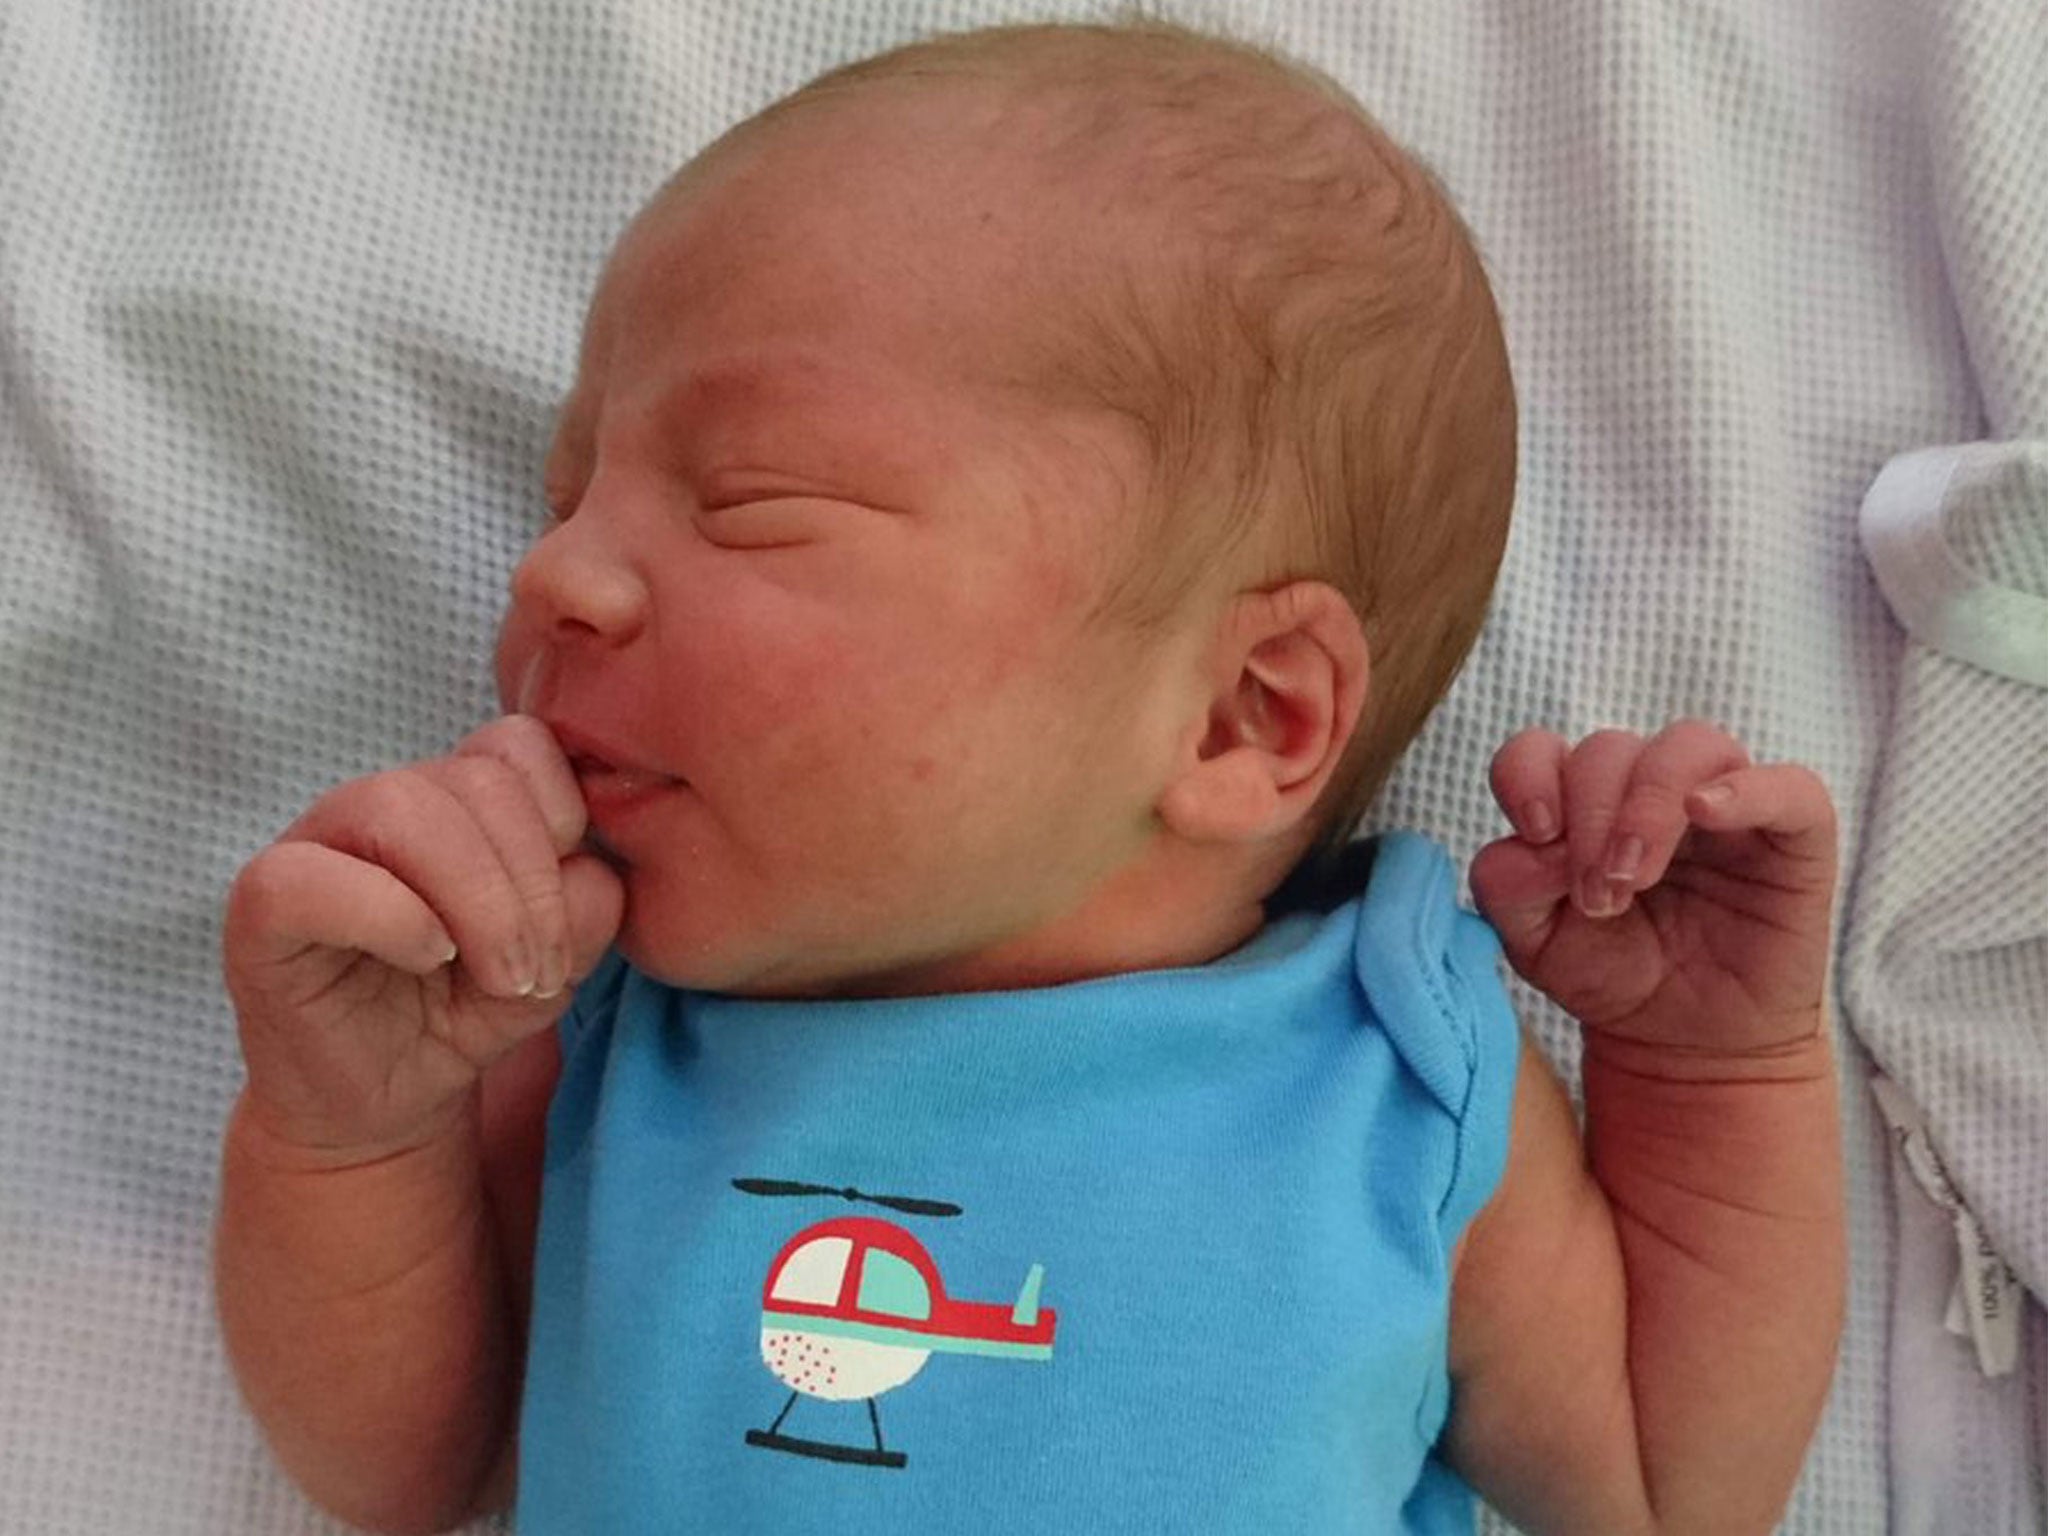 Baby Torran MacDonald was born around 1,400 feet above Cornwall on a coastguard helicopter